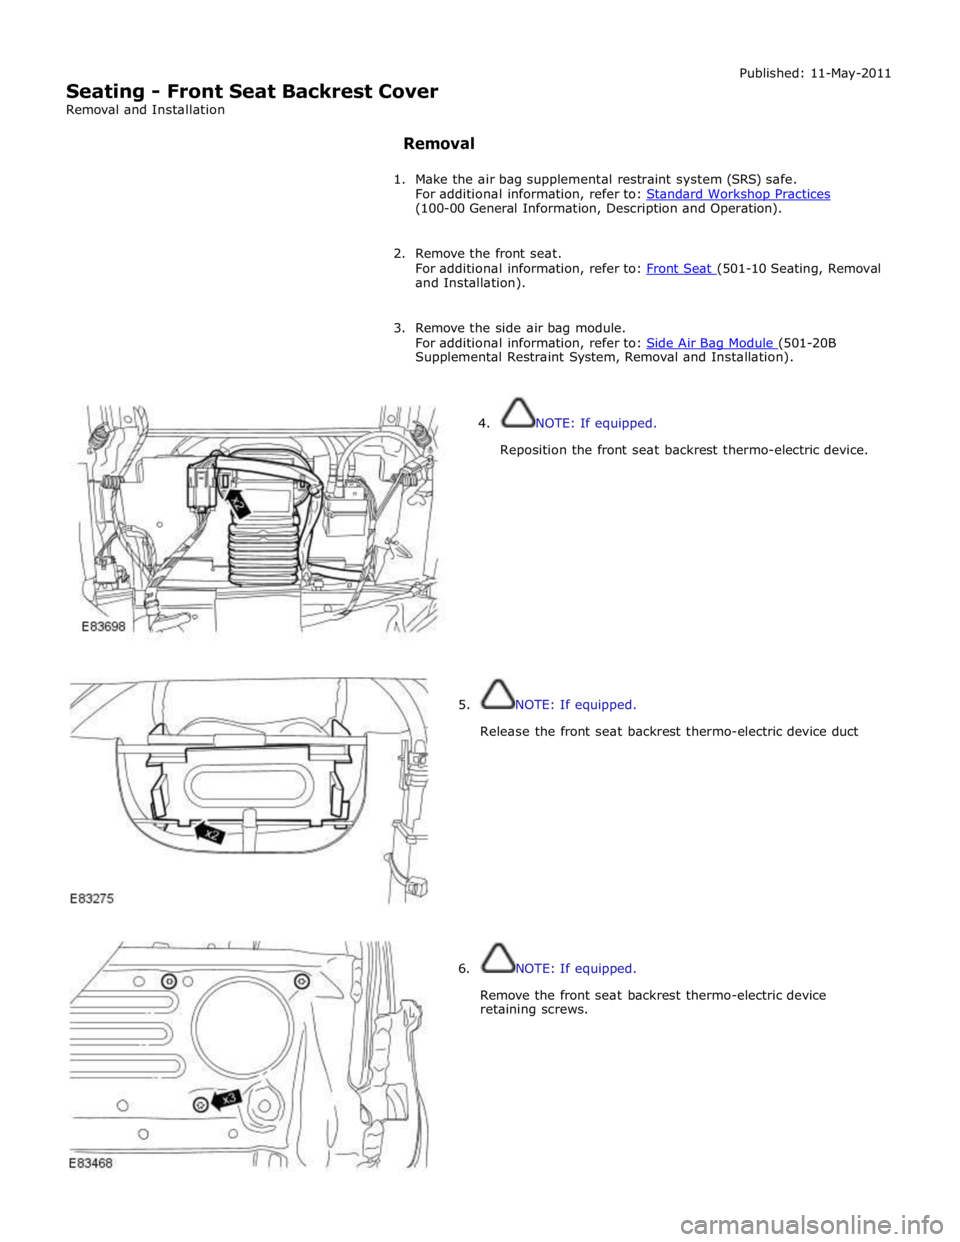 JAGUAR XFR 2010 1.G Workshop Manual  
Seating - Front Seat Backrest Cover 
Removal and Installation 
 Removal Published: 11-May-2011 
 
1. Make the air bag supplemental restraint system (SRS) safe. 
For additional information, refer to: